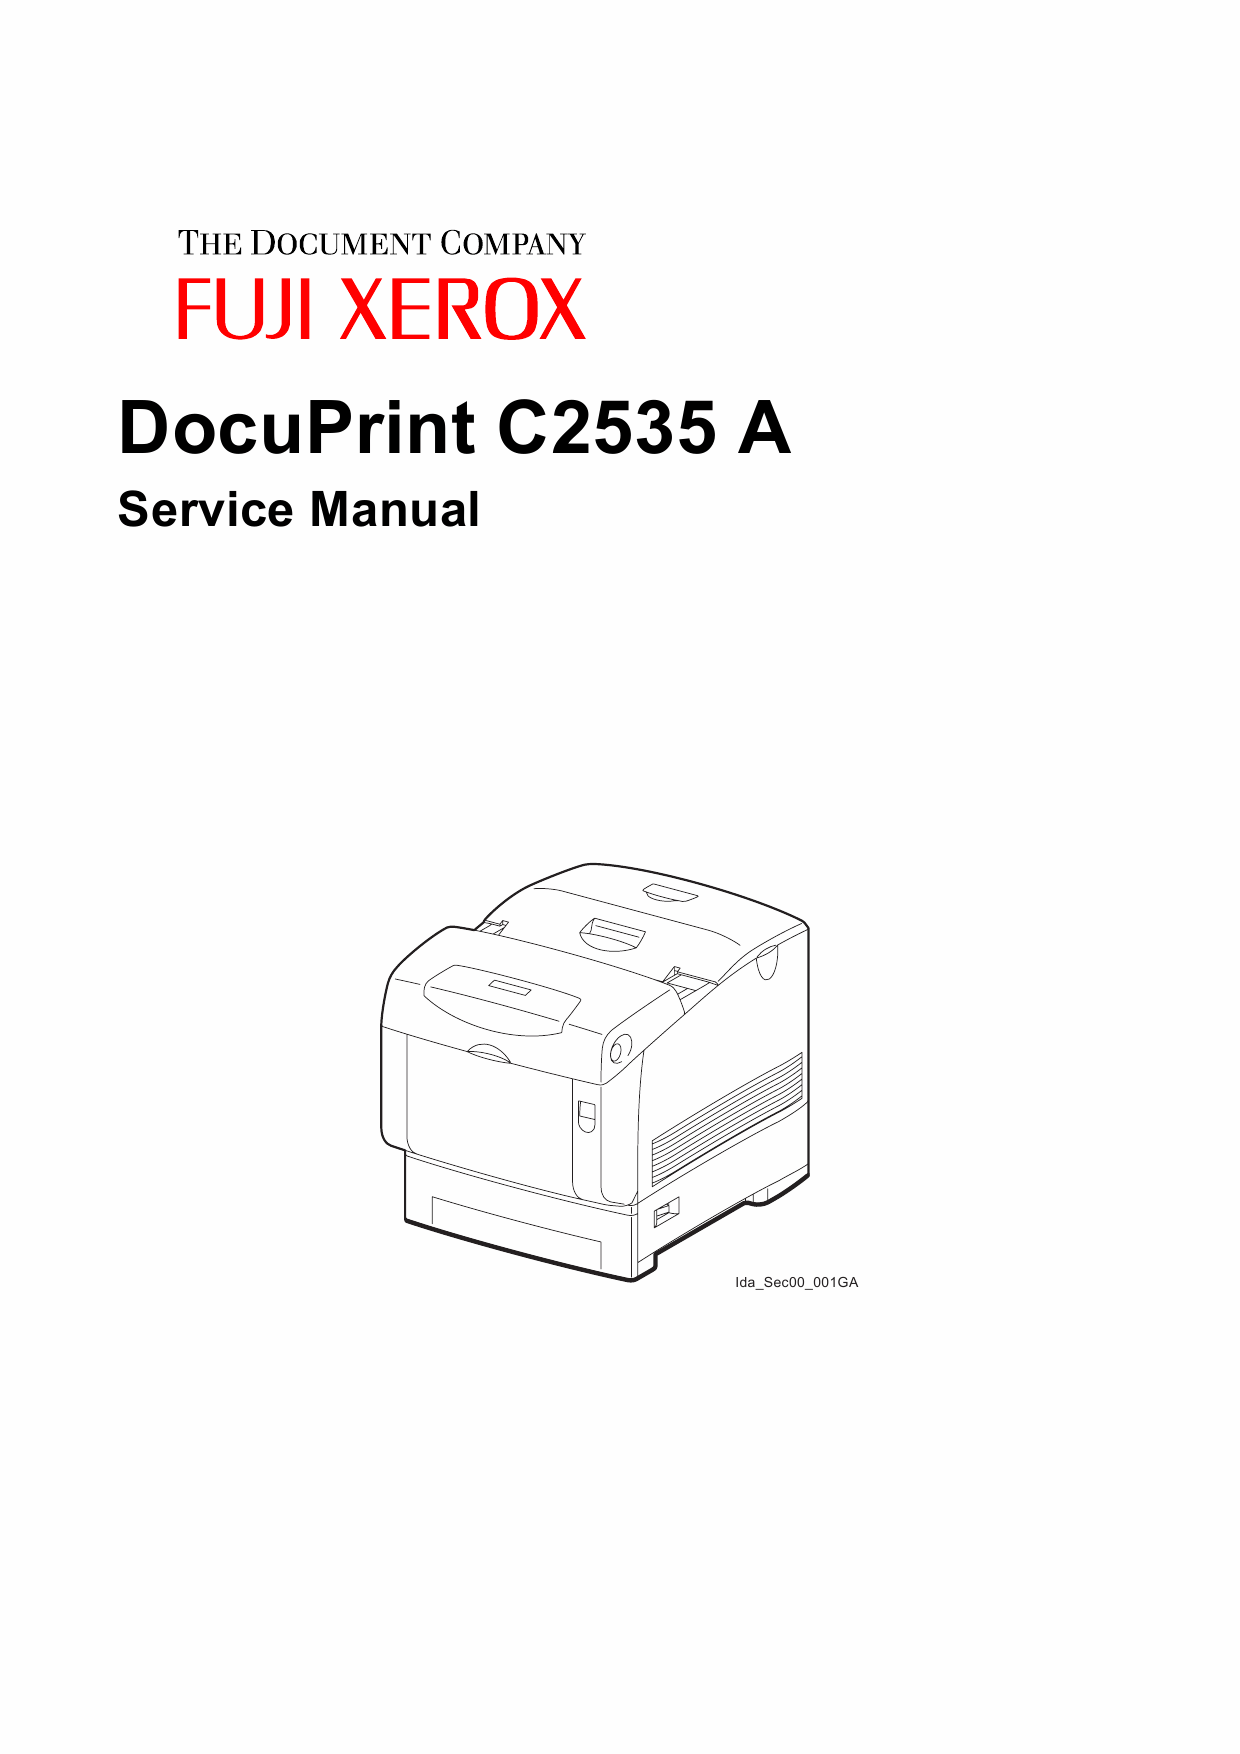 Xerox DocuPrint C2535 Fuji Color-Laser-Printer Parts List and Service Manual-1